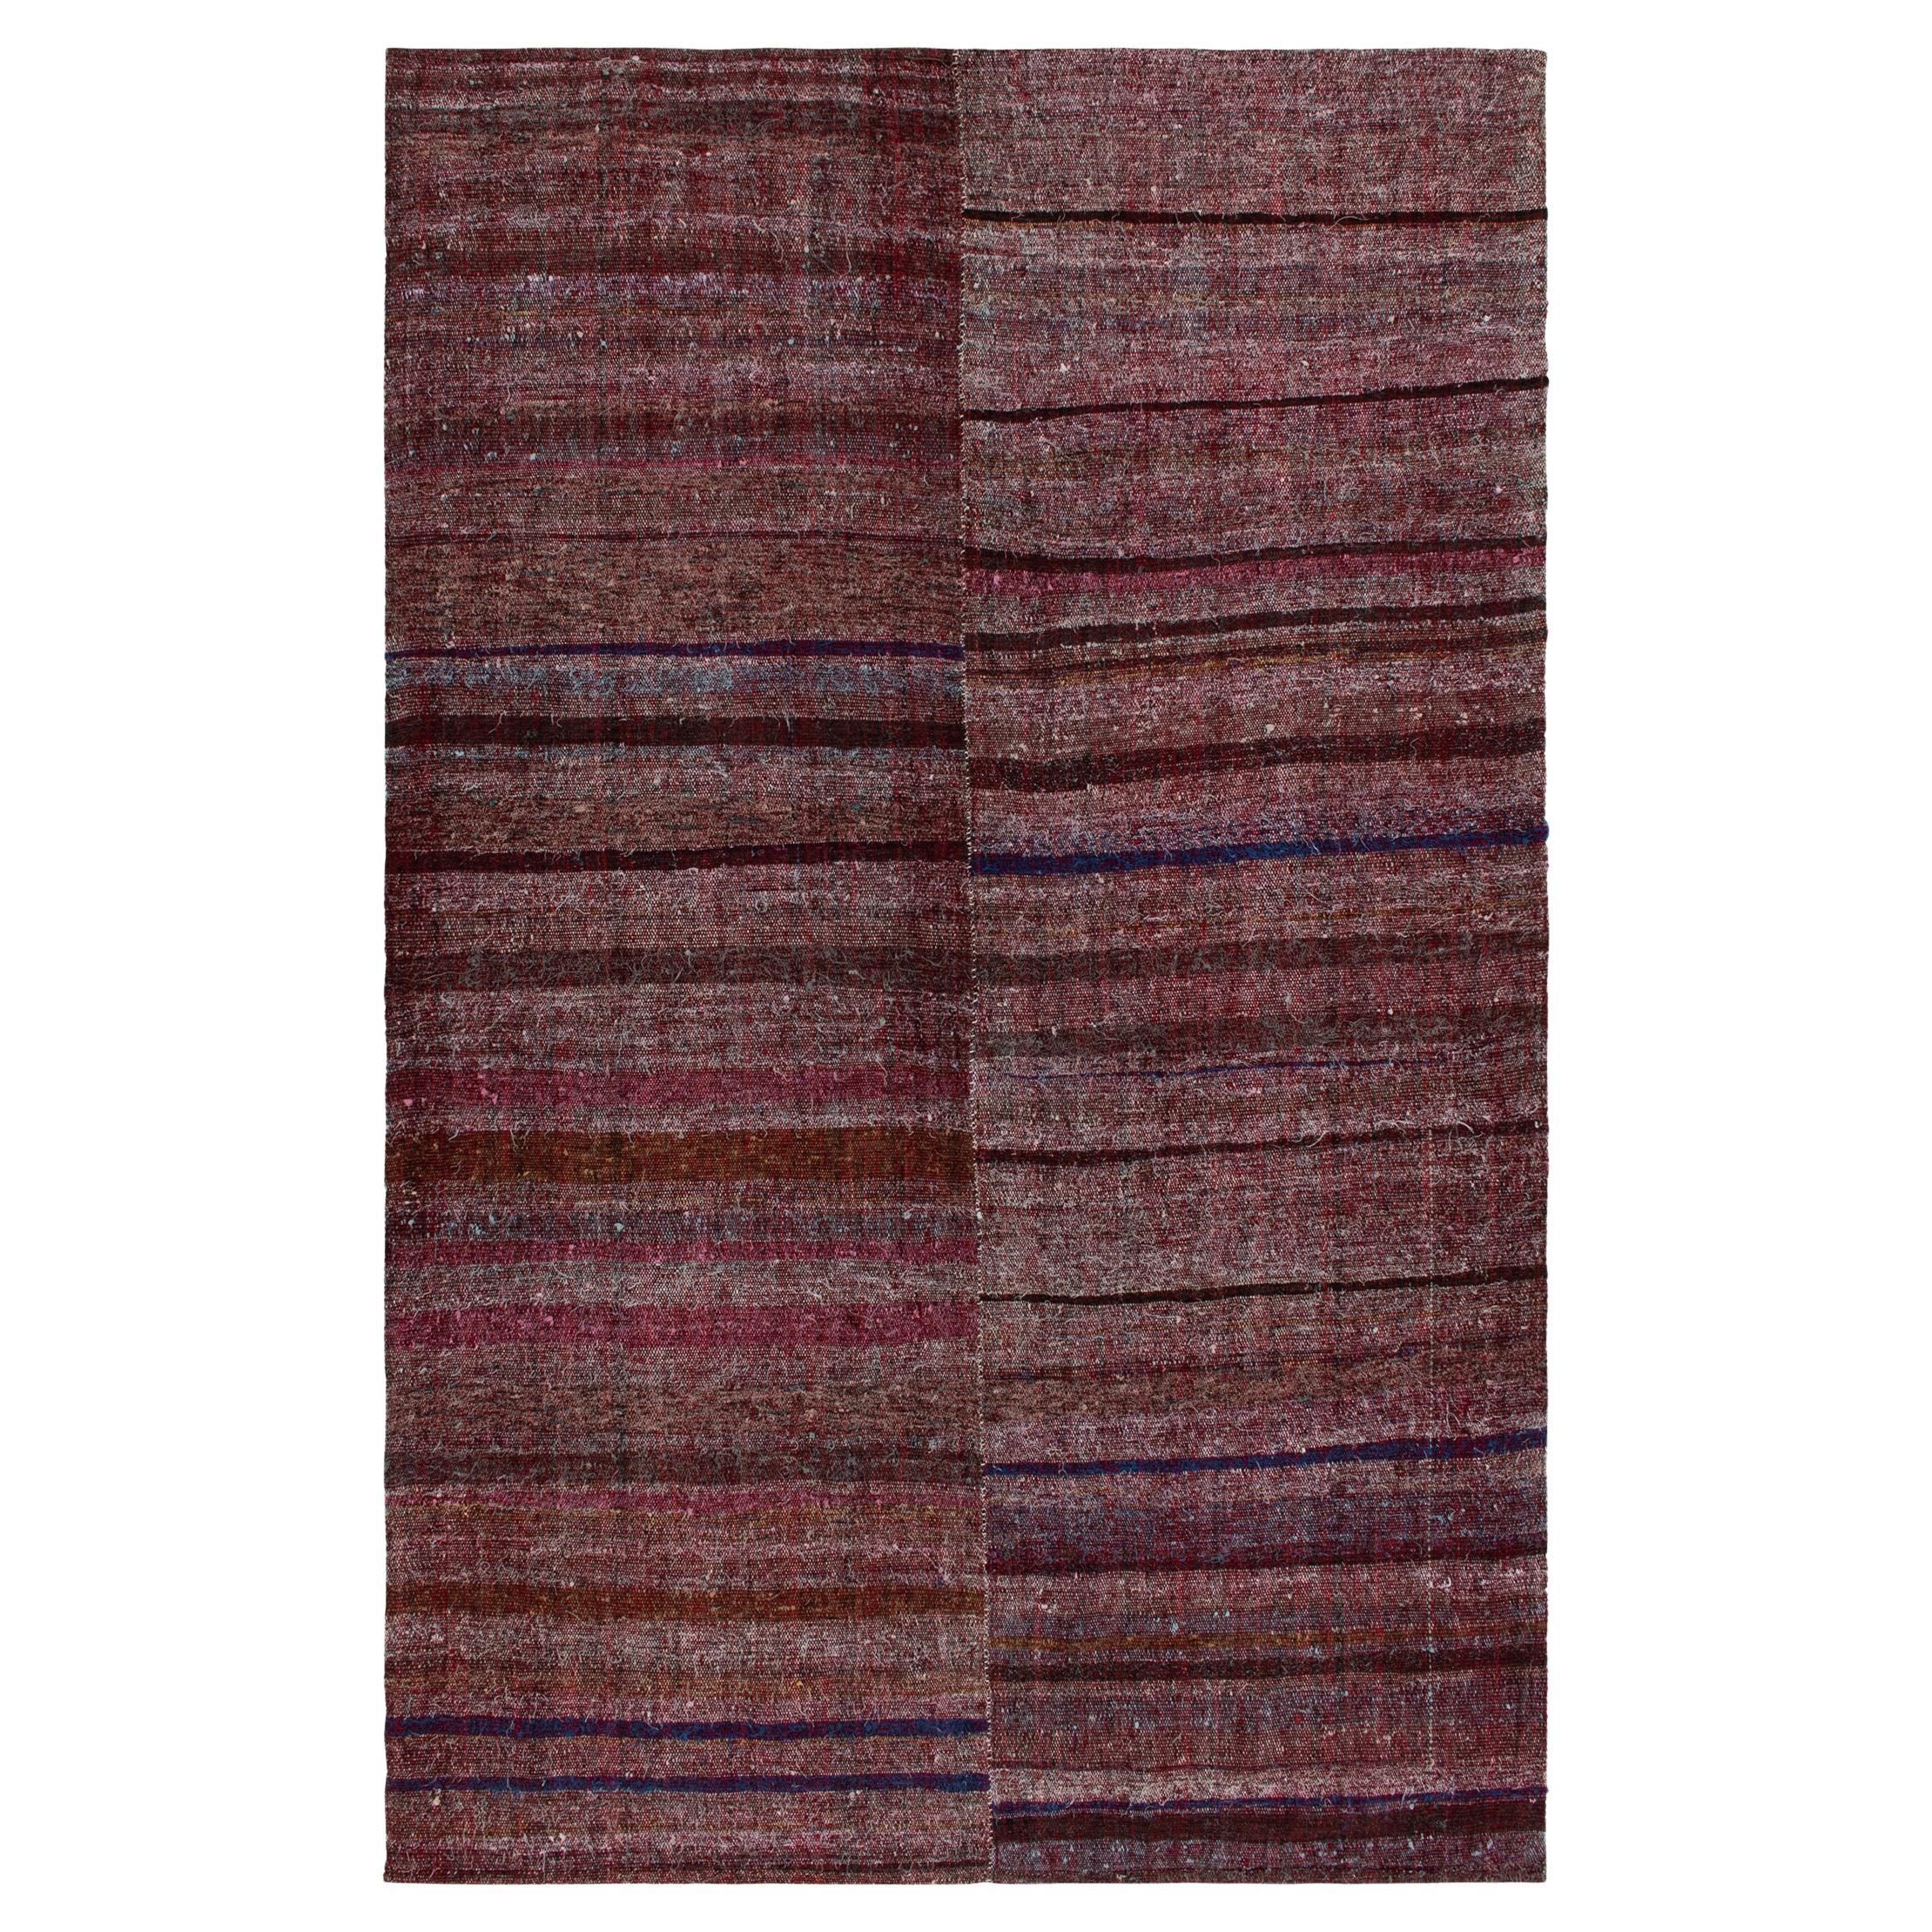 Vintage Paneled Kilim in Purple, Blue & Brown Stripe Patterns, from Rug & Kilim For Sale